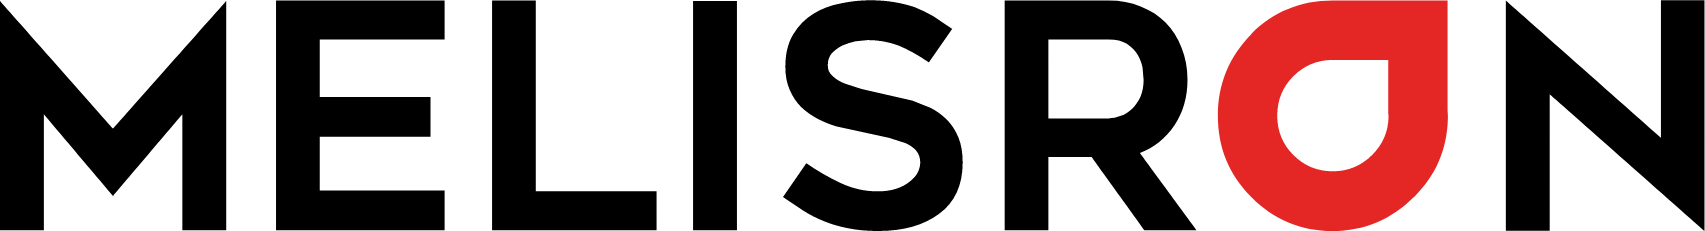 Melisron logo large (transparent PNG)